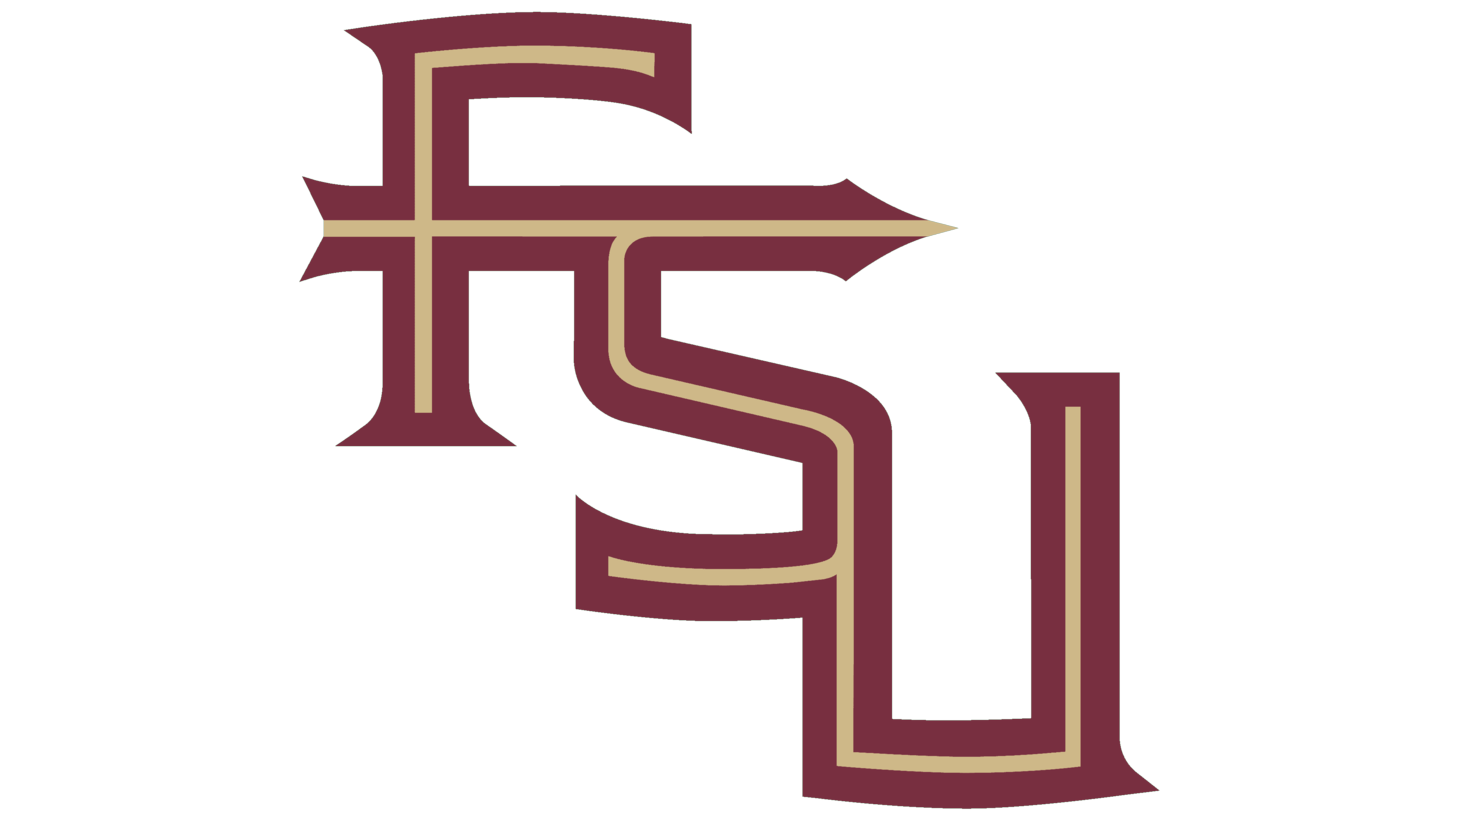 Florida state university logo